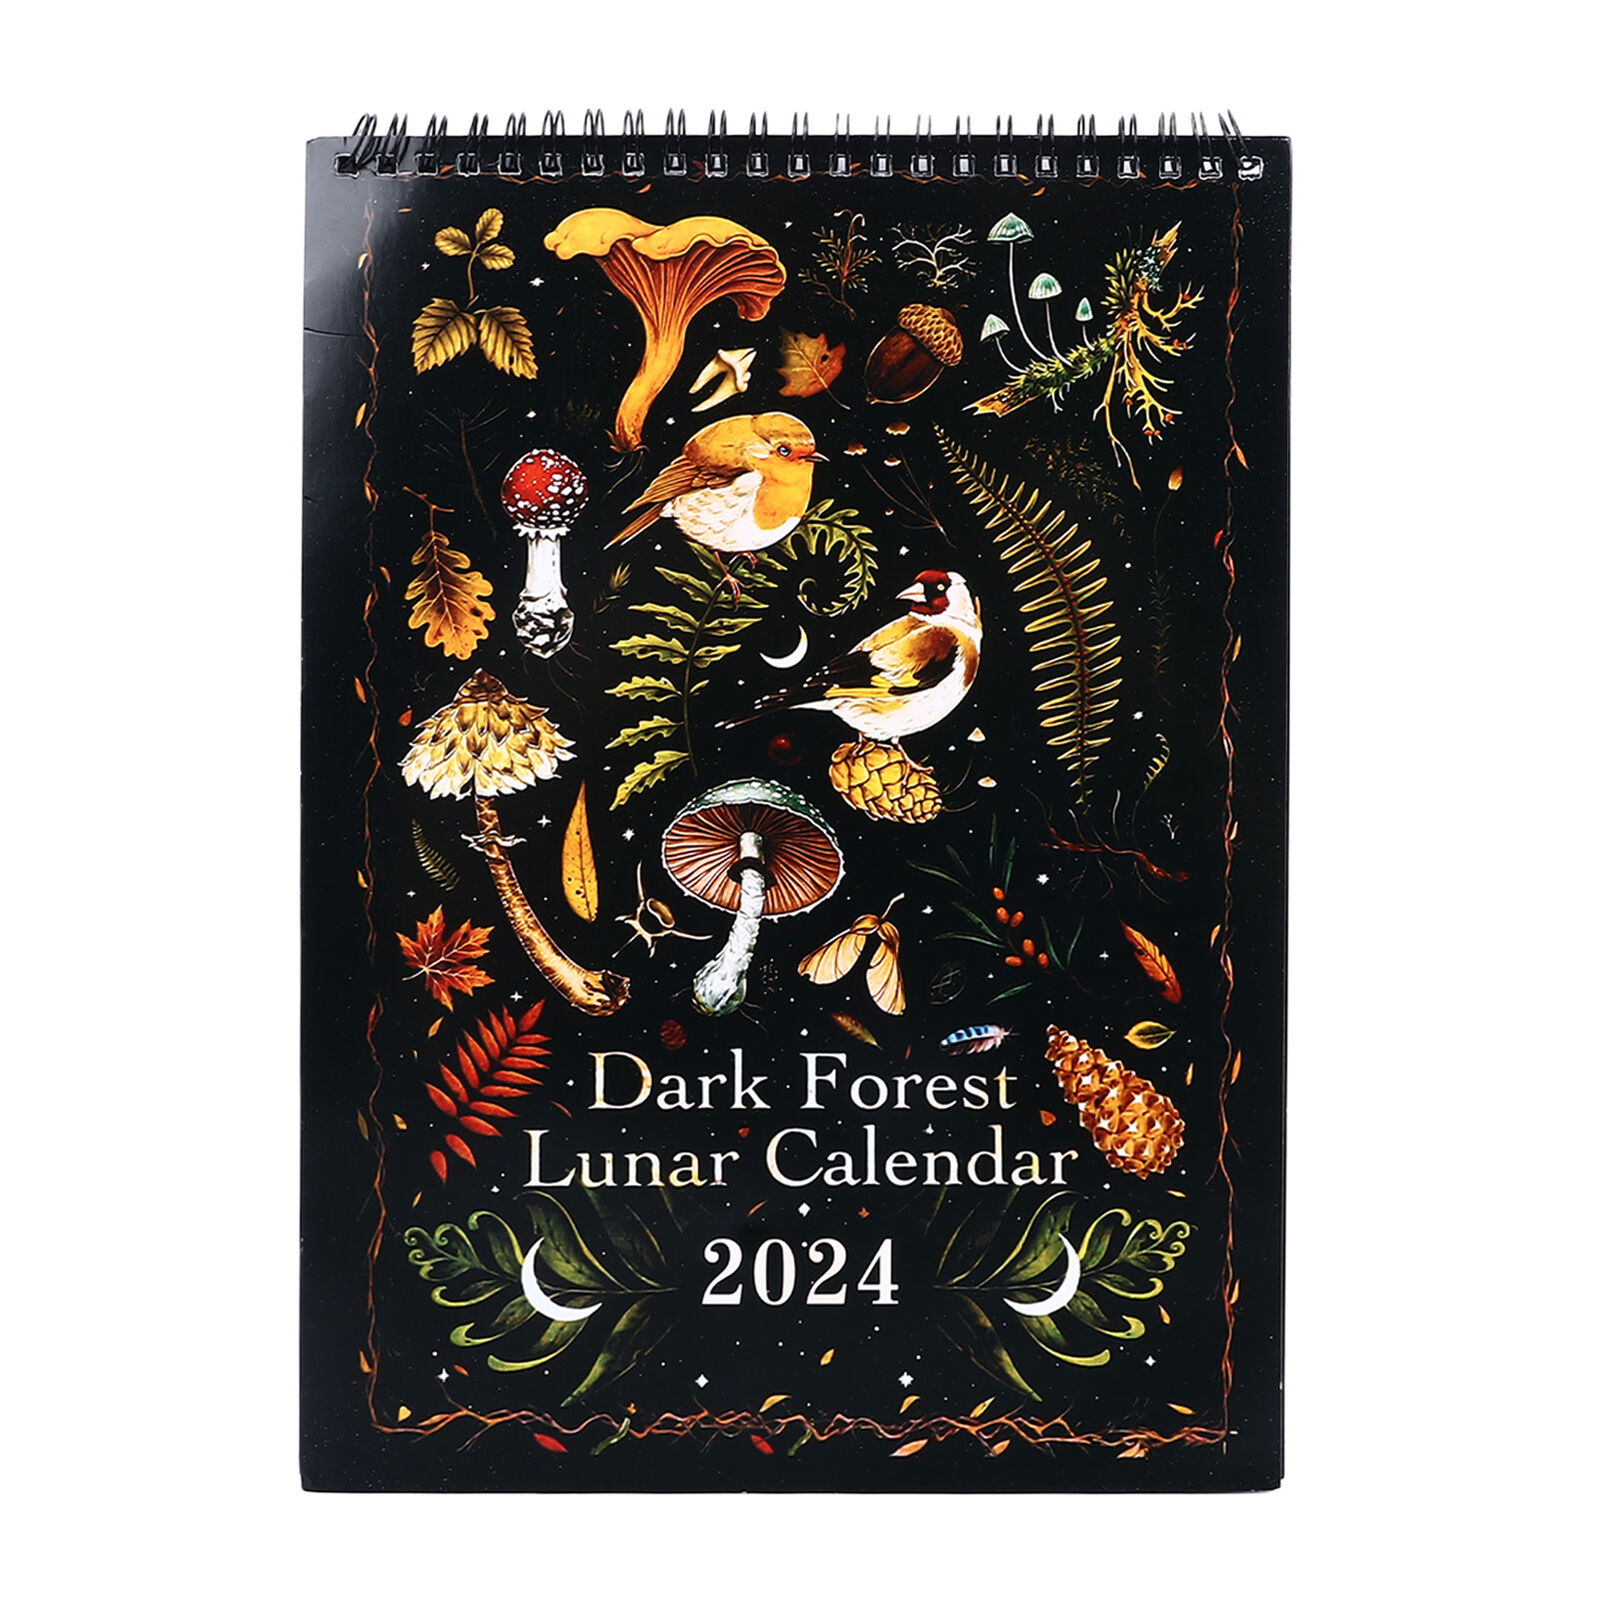 2024 Lunar Calendar Dark Forest Coated Paper Rich Elements Moon